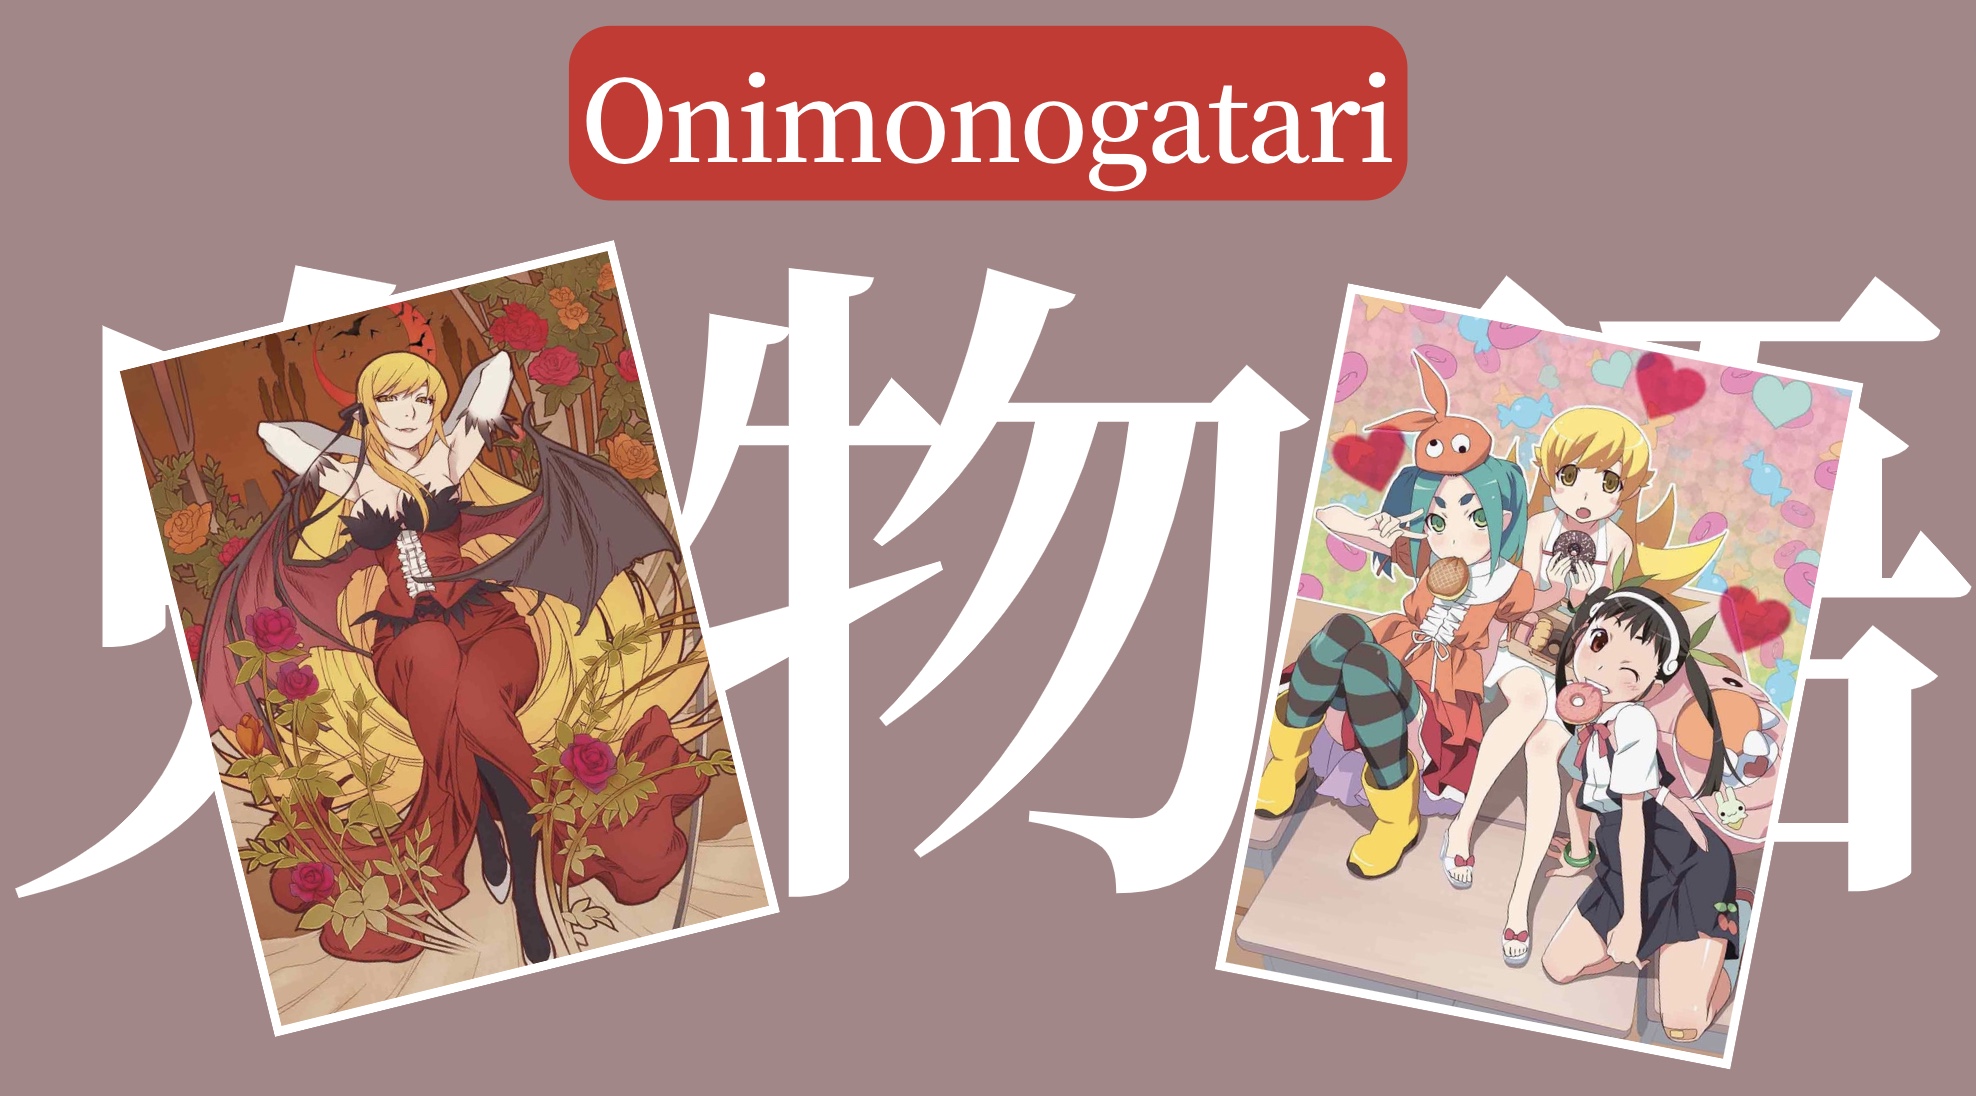 Onimonogatari